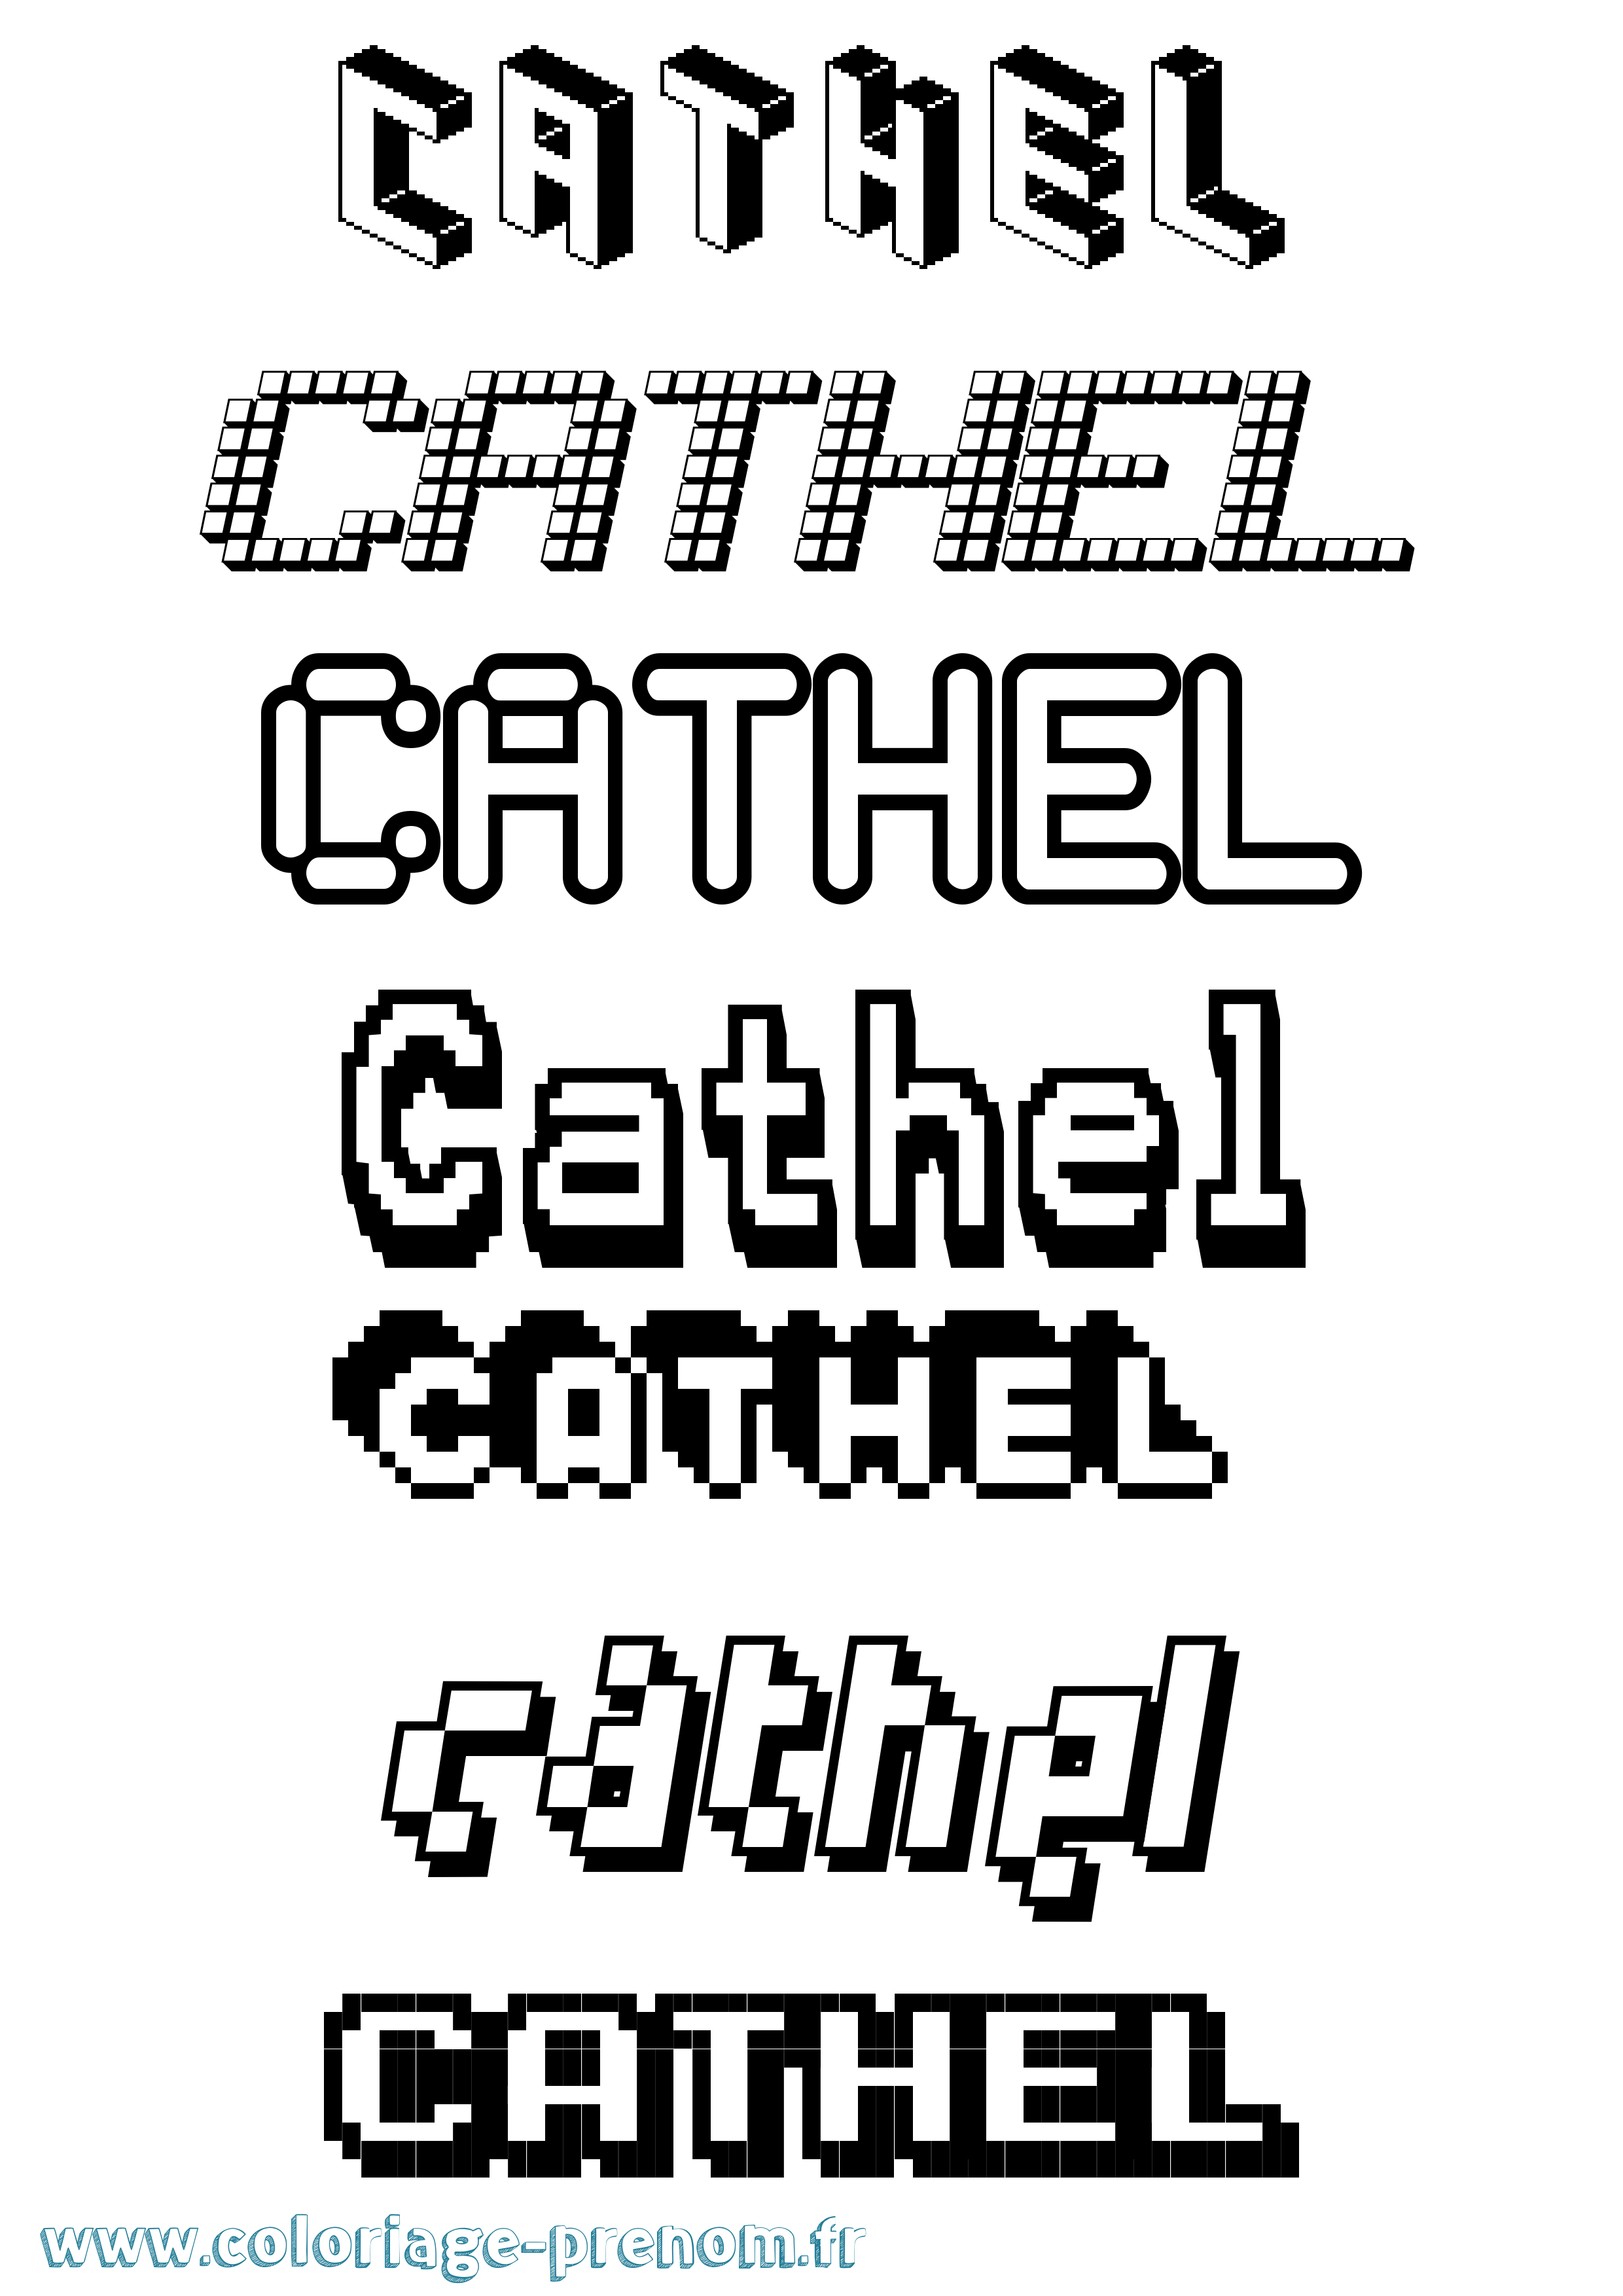 Coloriage prénom Cathel Pixel